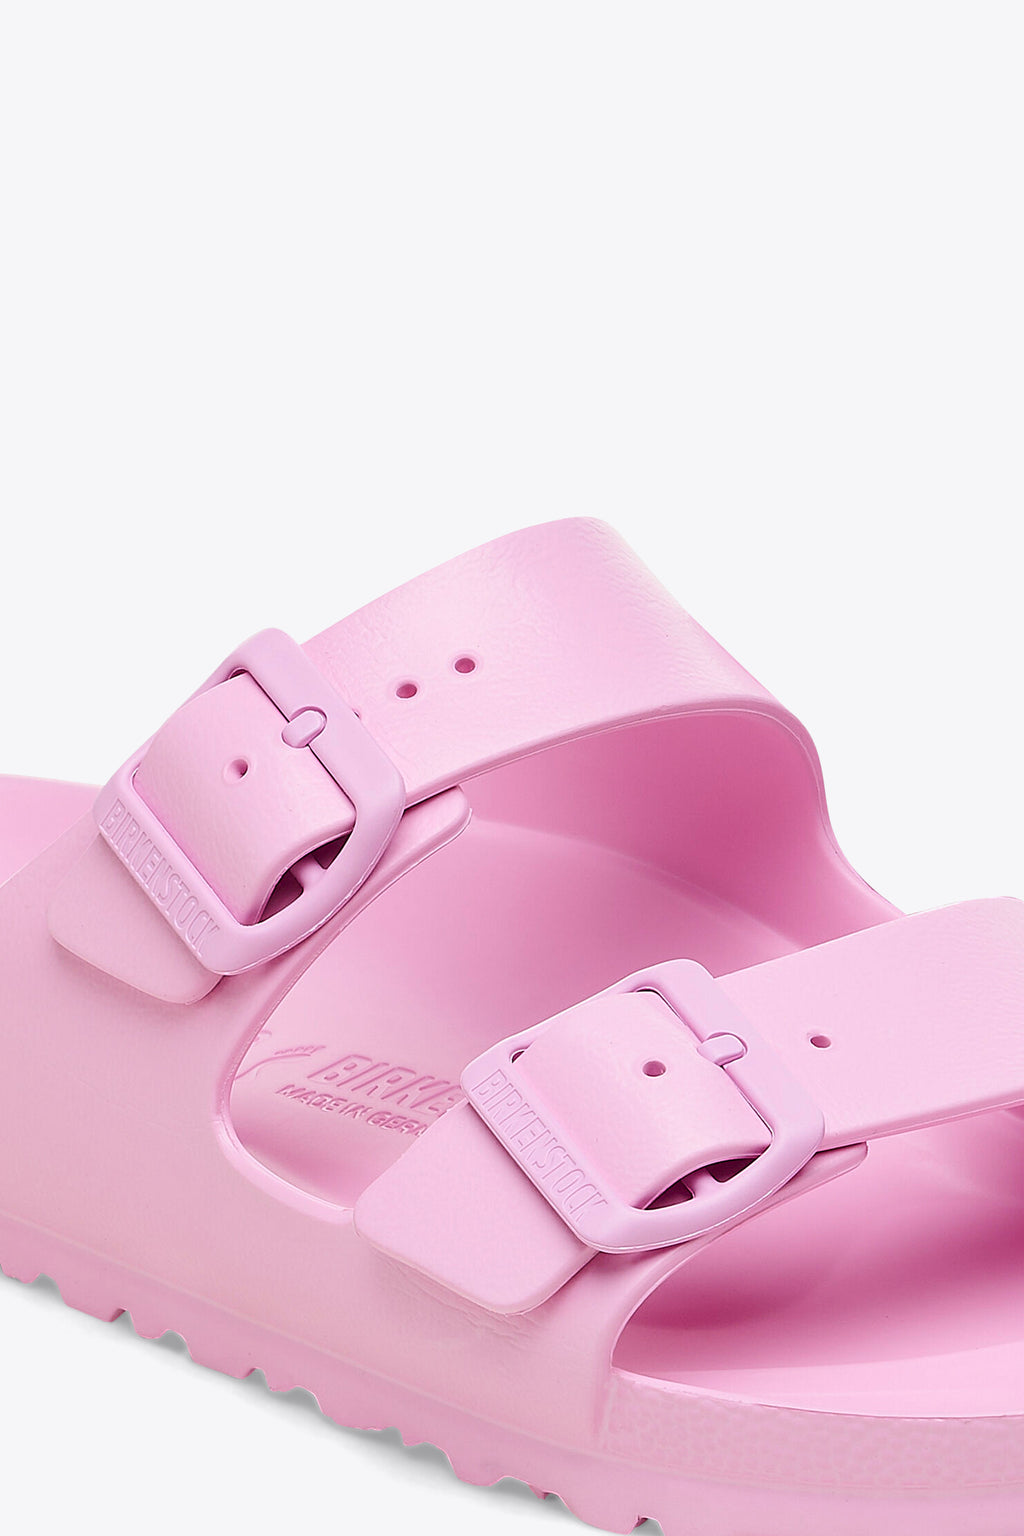 alt-image__Pink-rubber-sandal-with-two-straps---Arizona-Eva